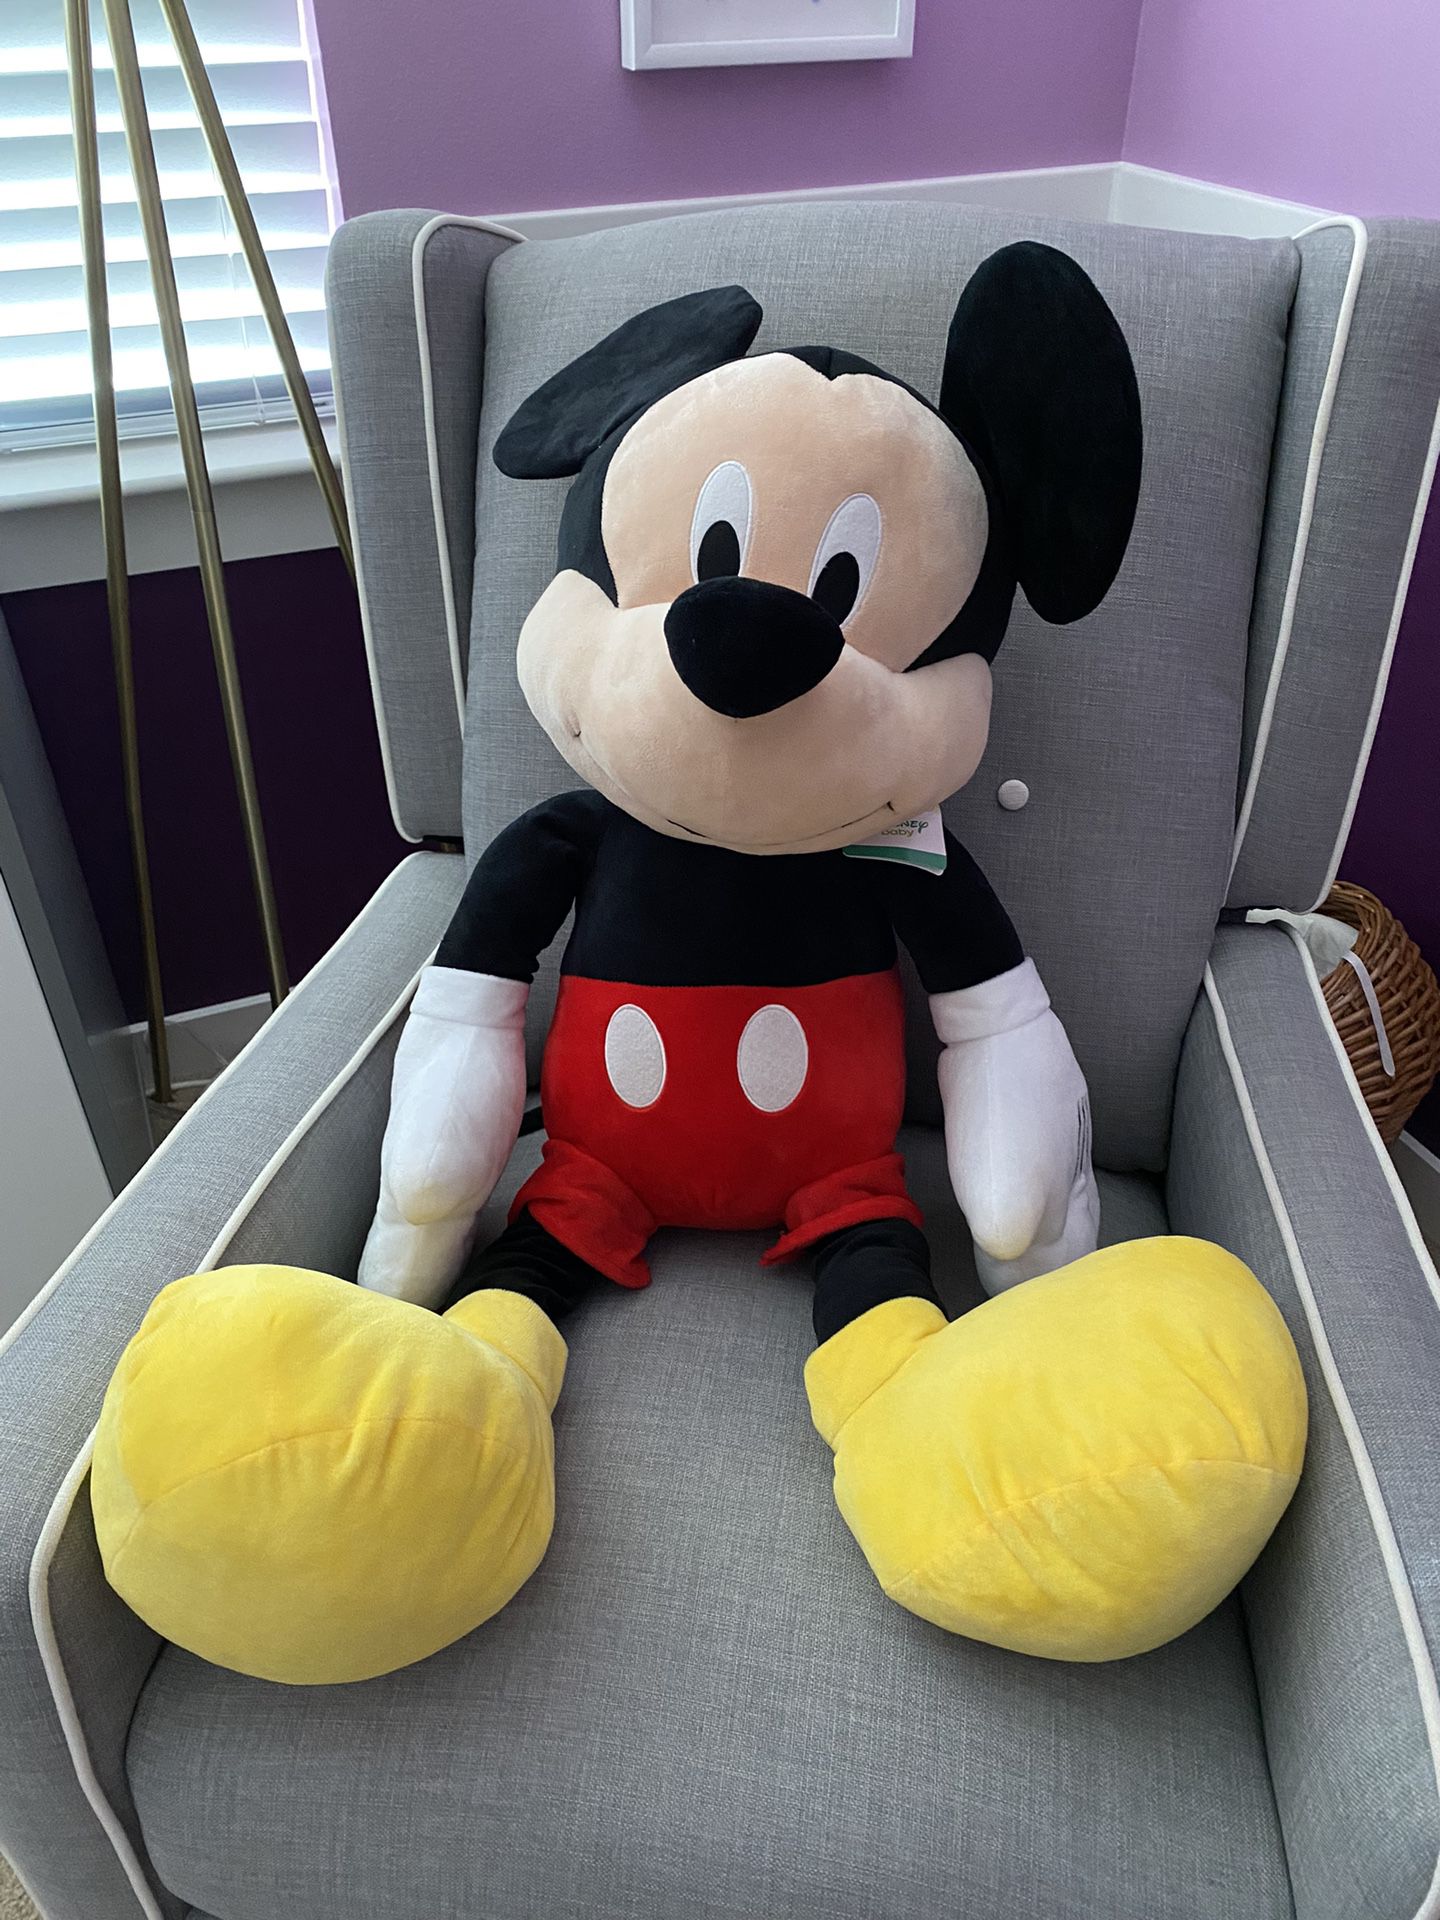 40” Disney Baby Mickey Mouse Plush Stuffed Animal